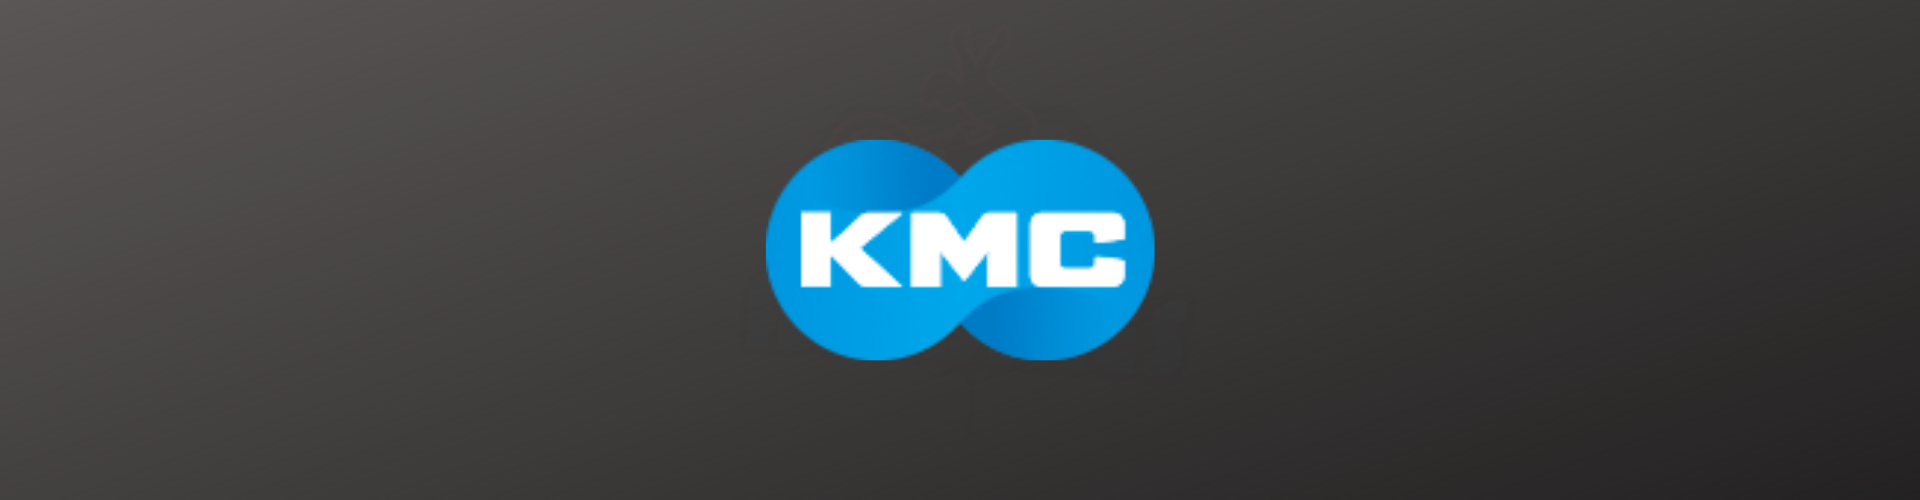 kmc Brand Category